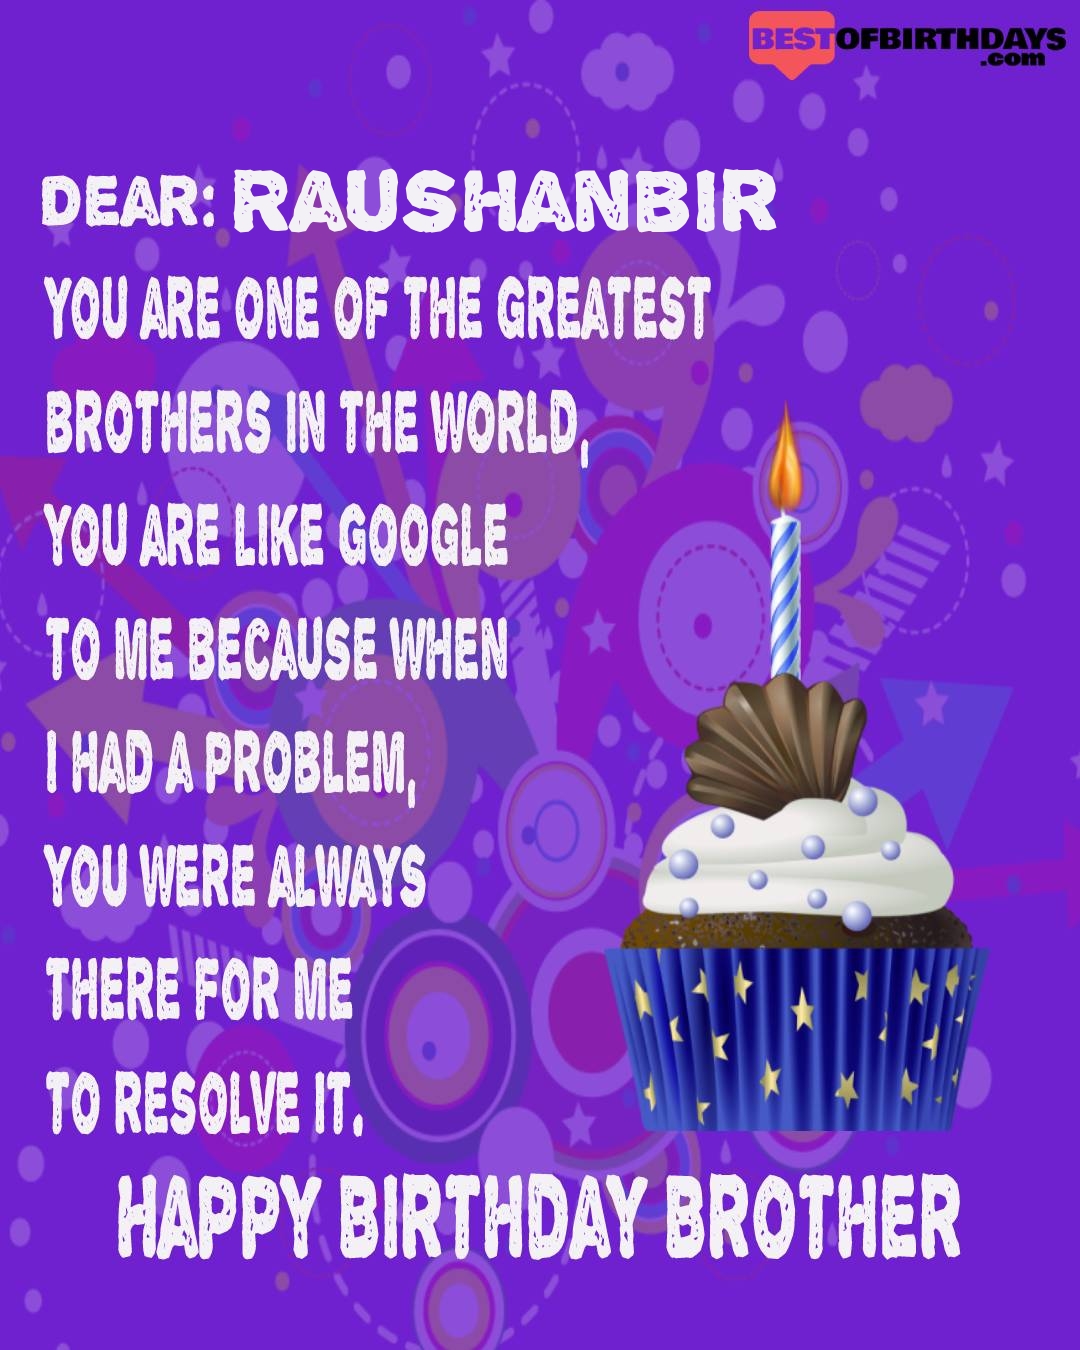 Happy birthday raushanbir bhai brother bro